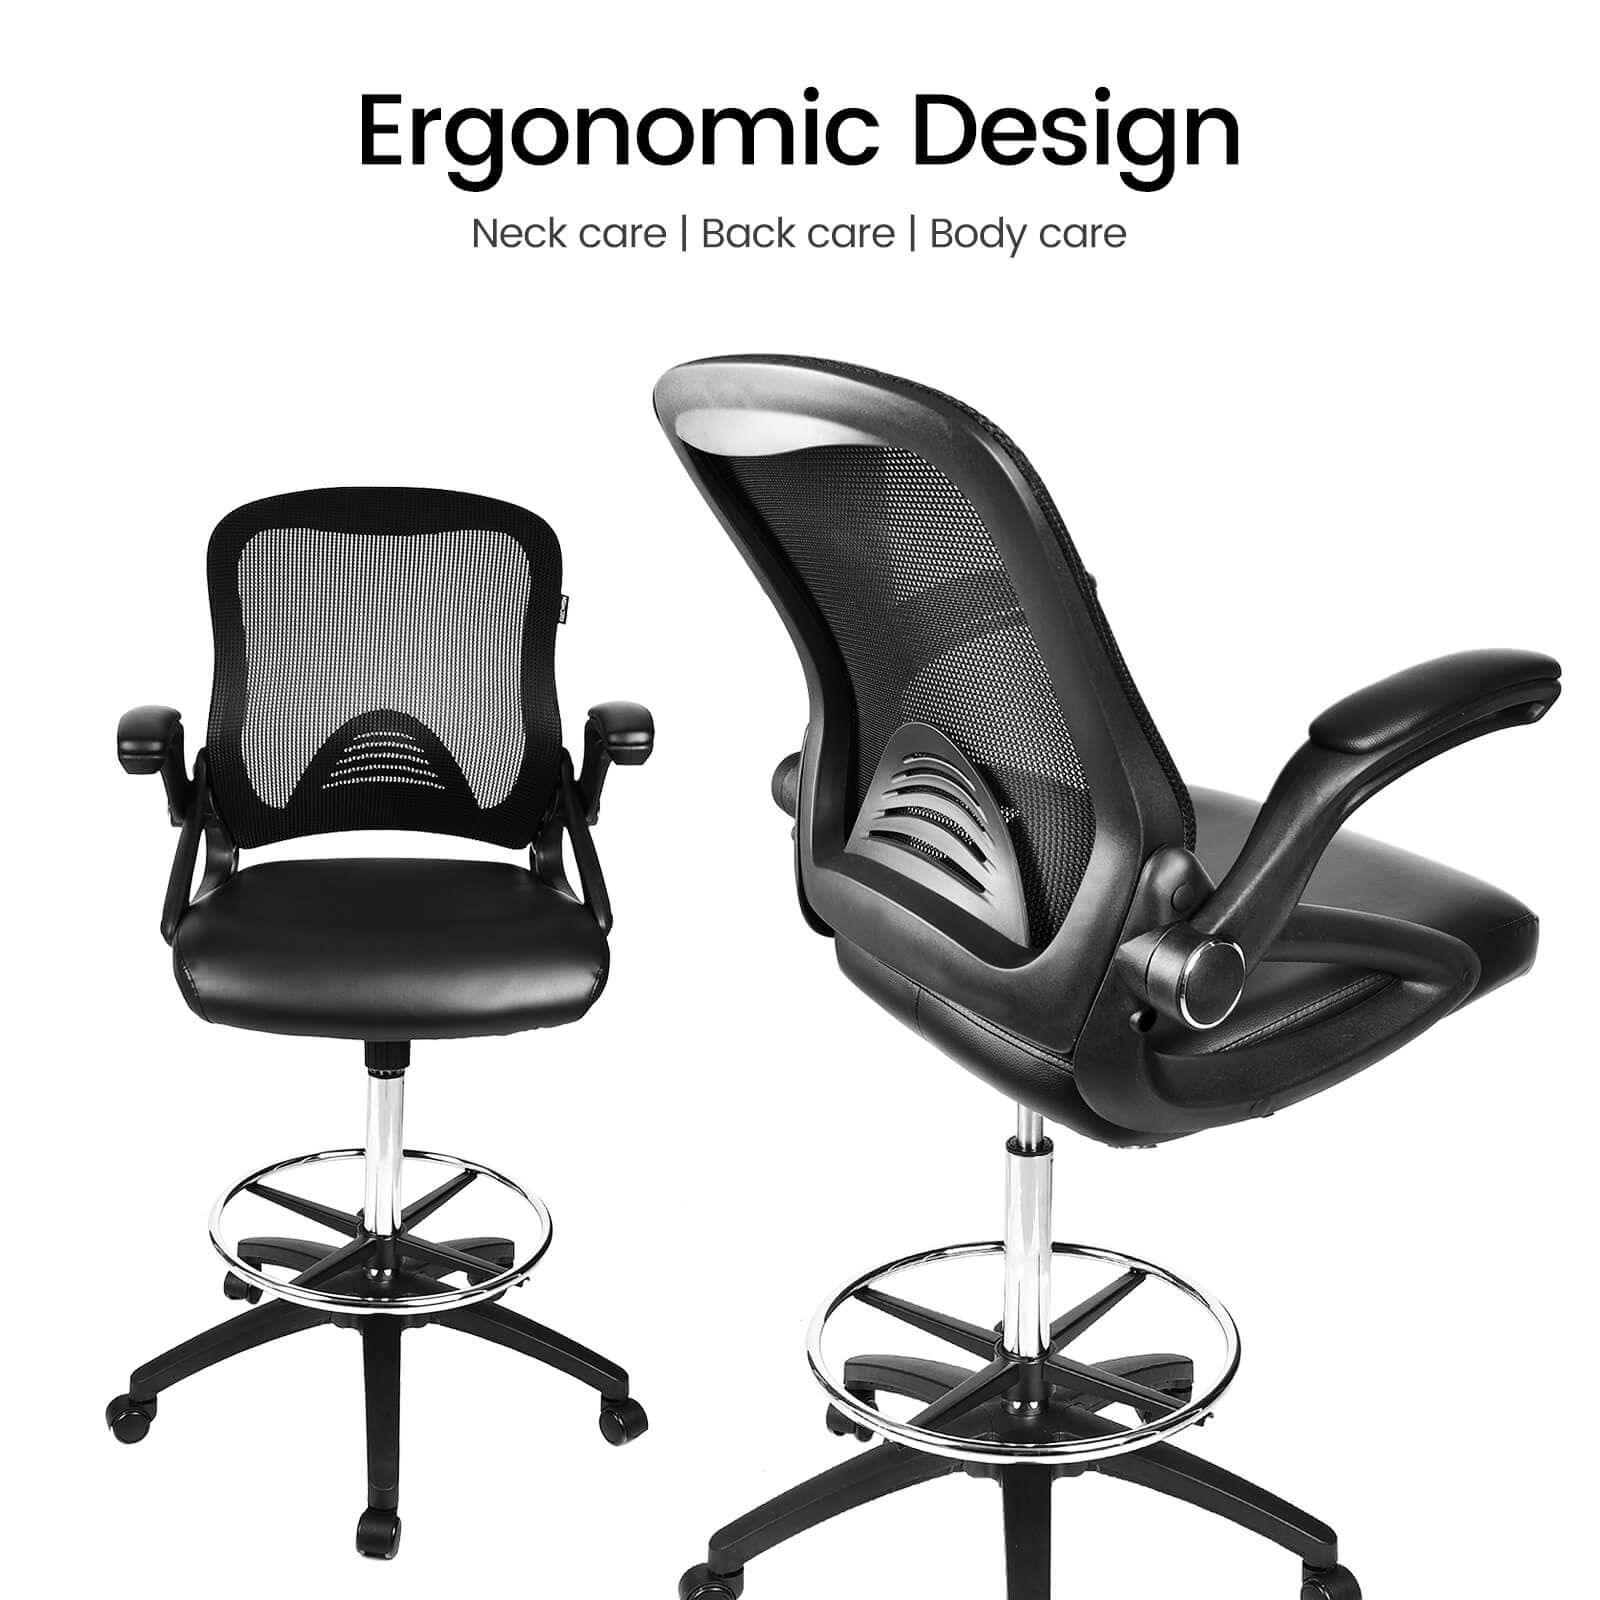 Elecwish black Drafting Chair OC09 has ergonomic design